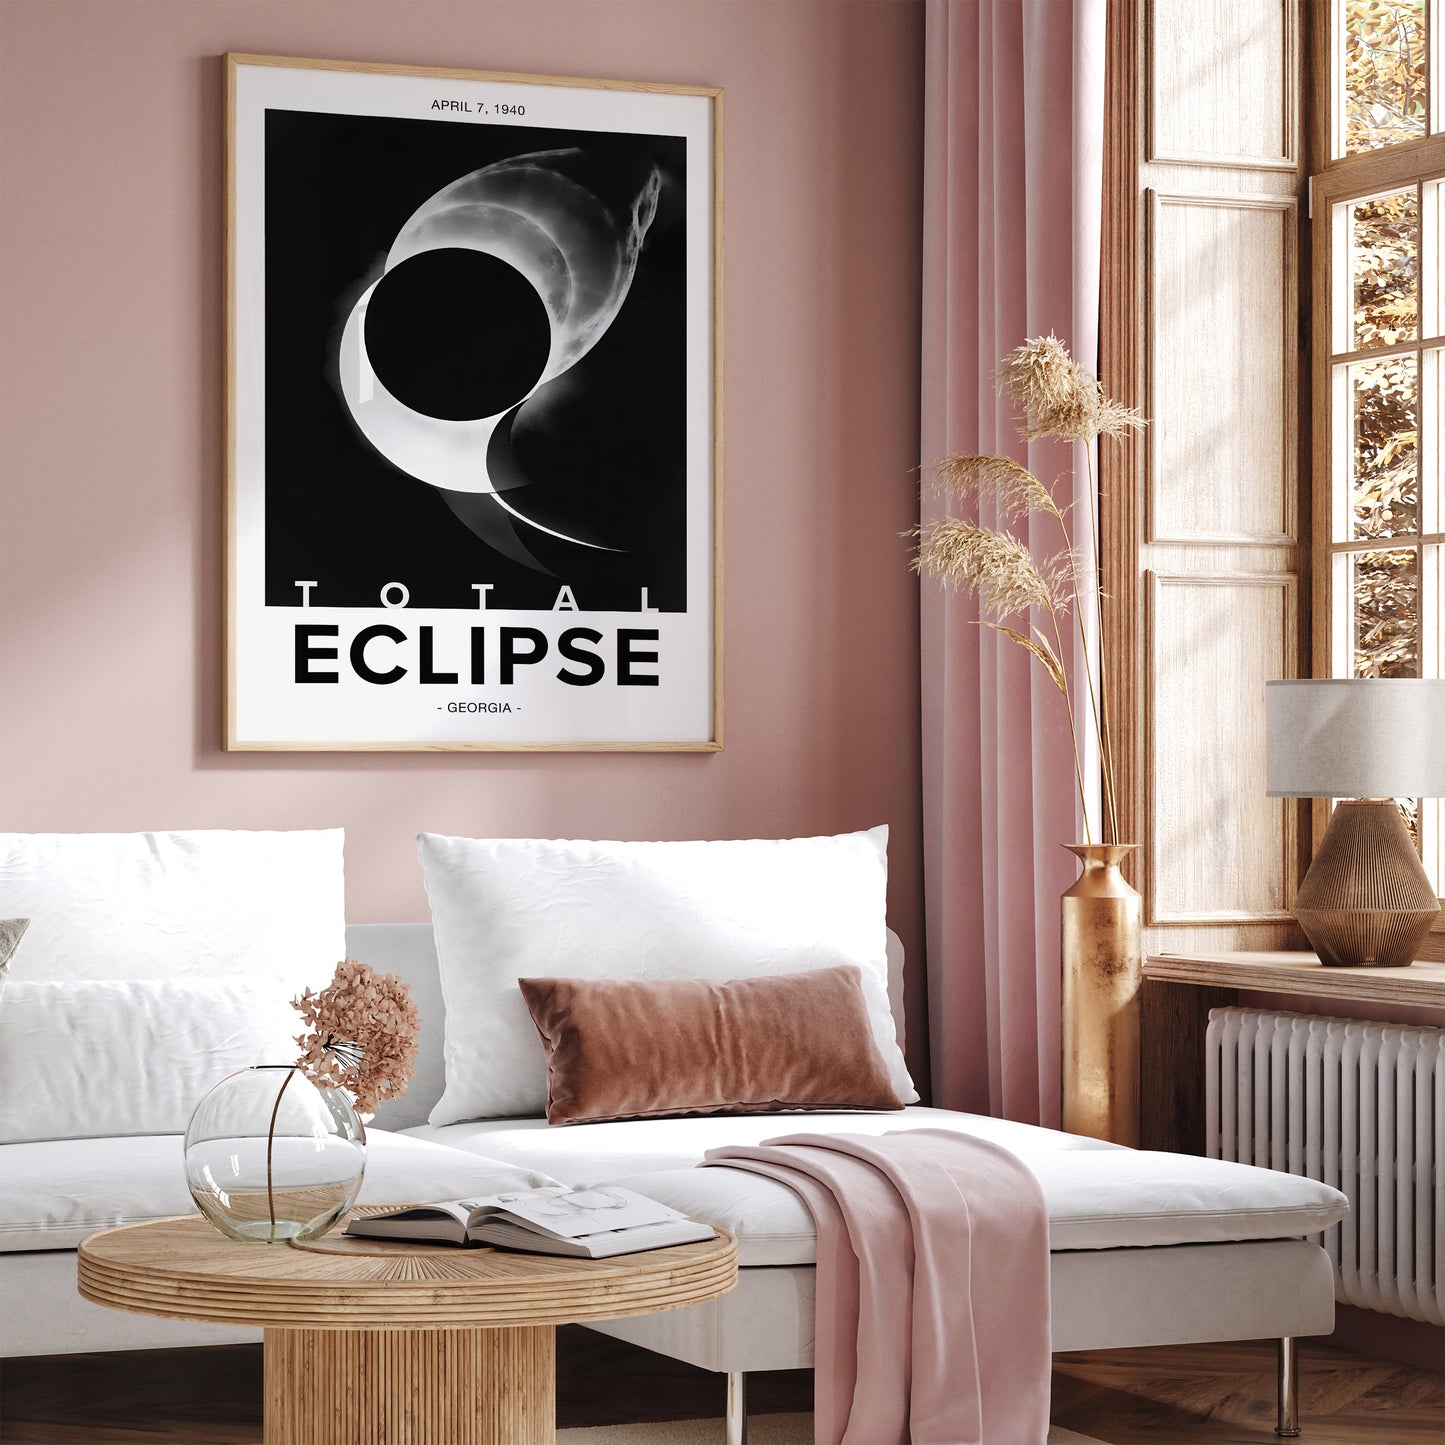 Total Eclipse Georgia 1940 Poster